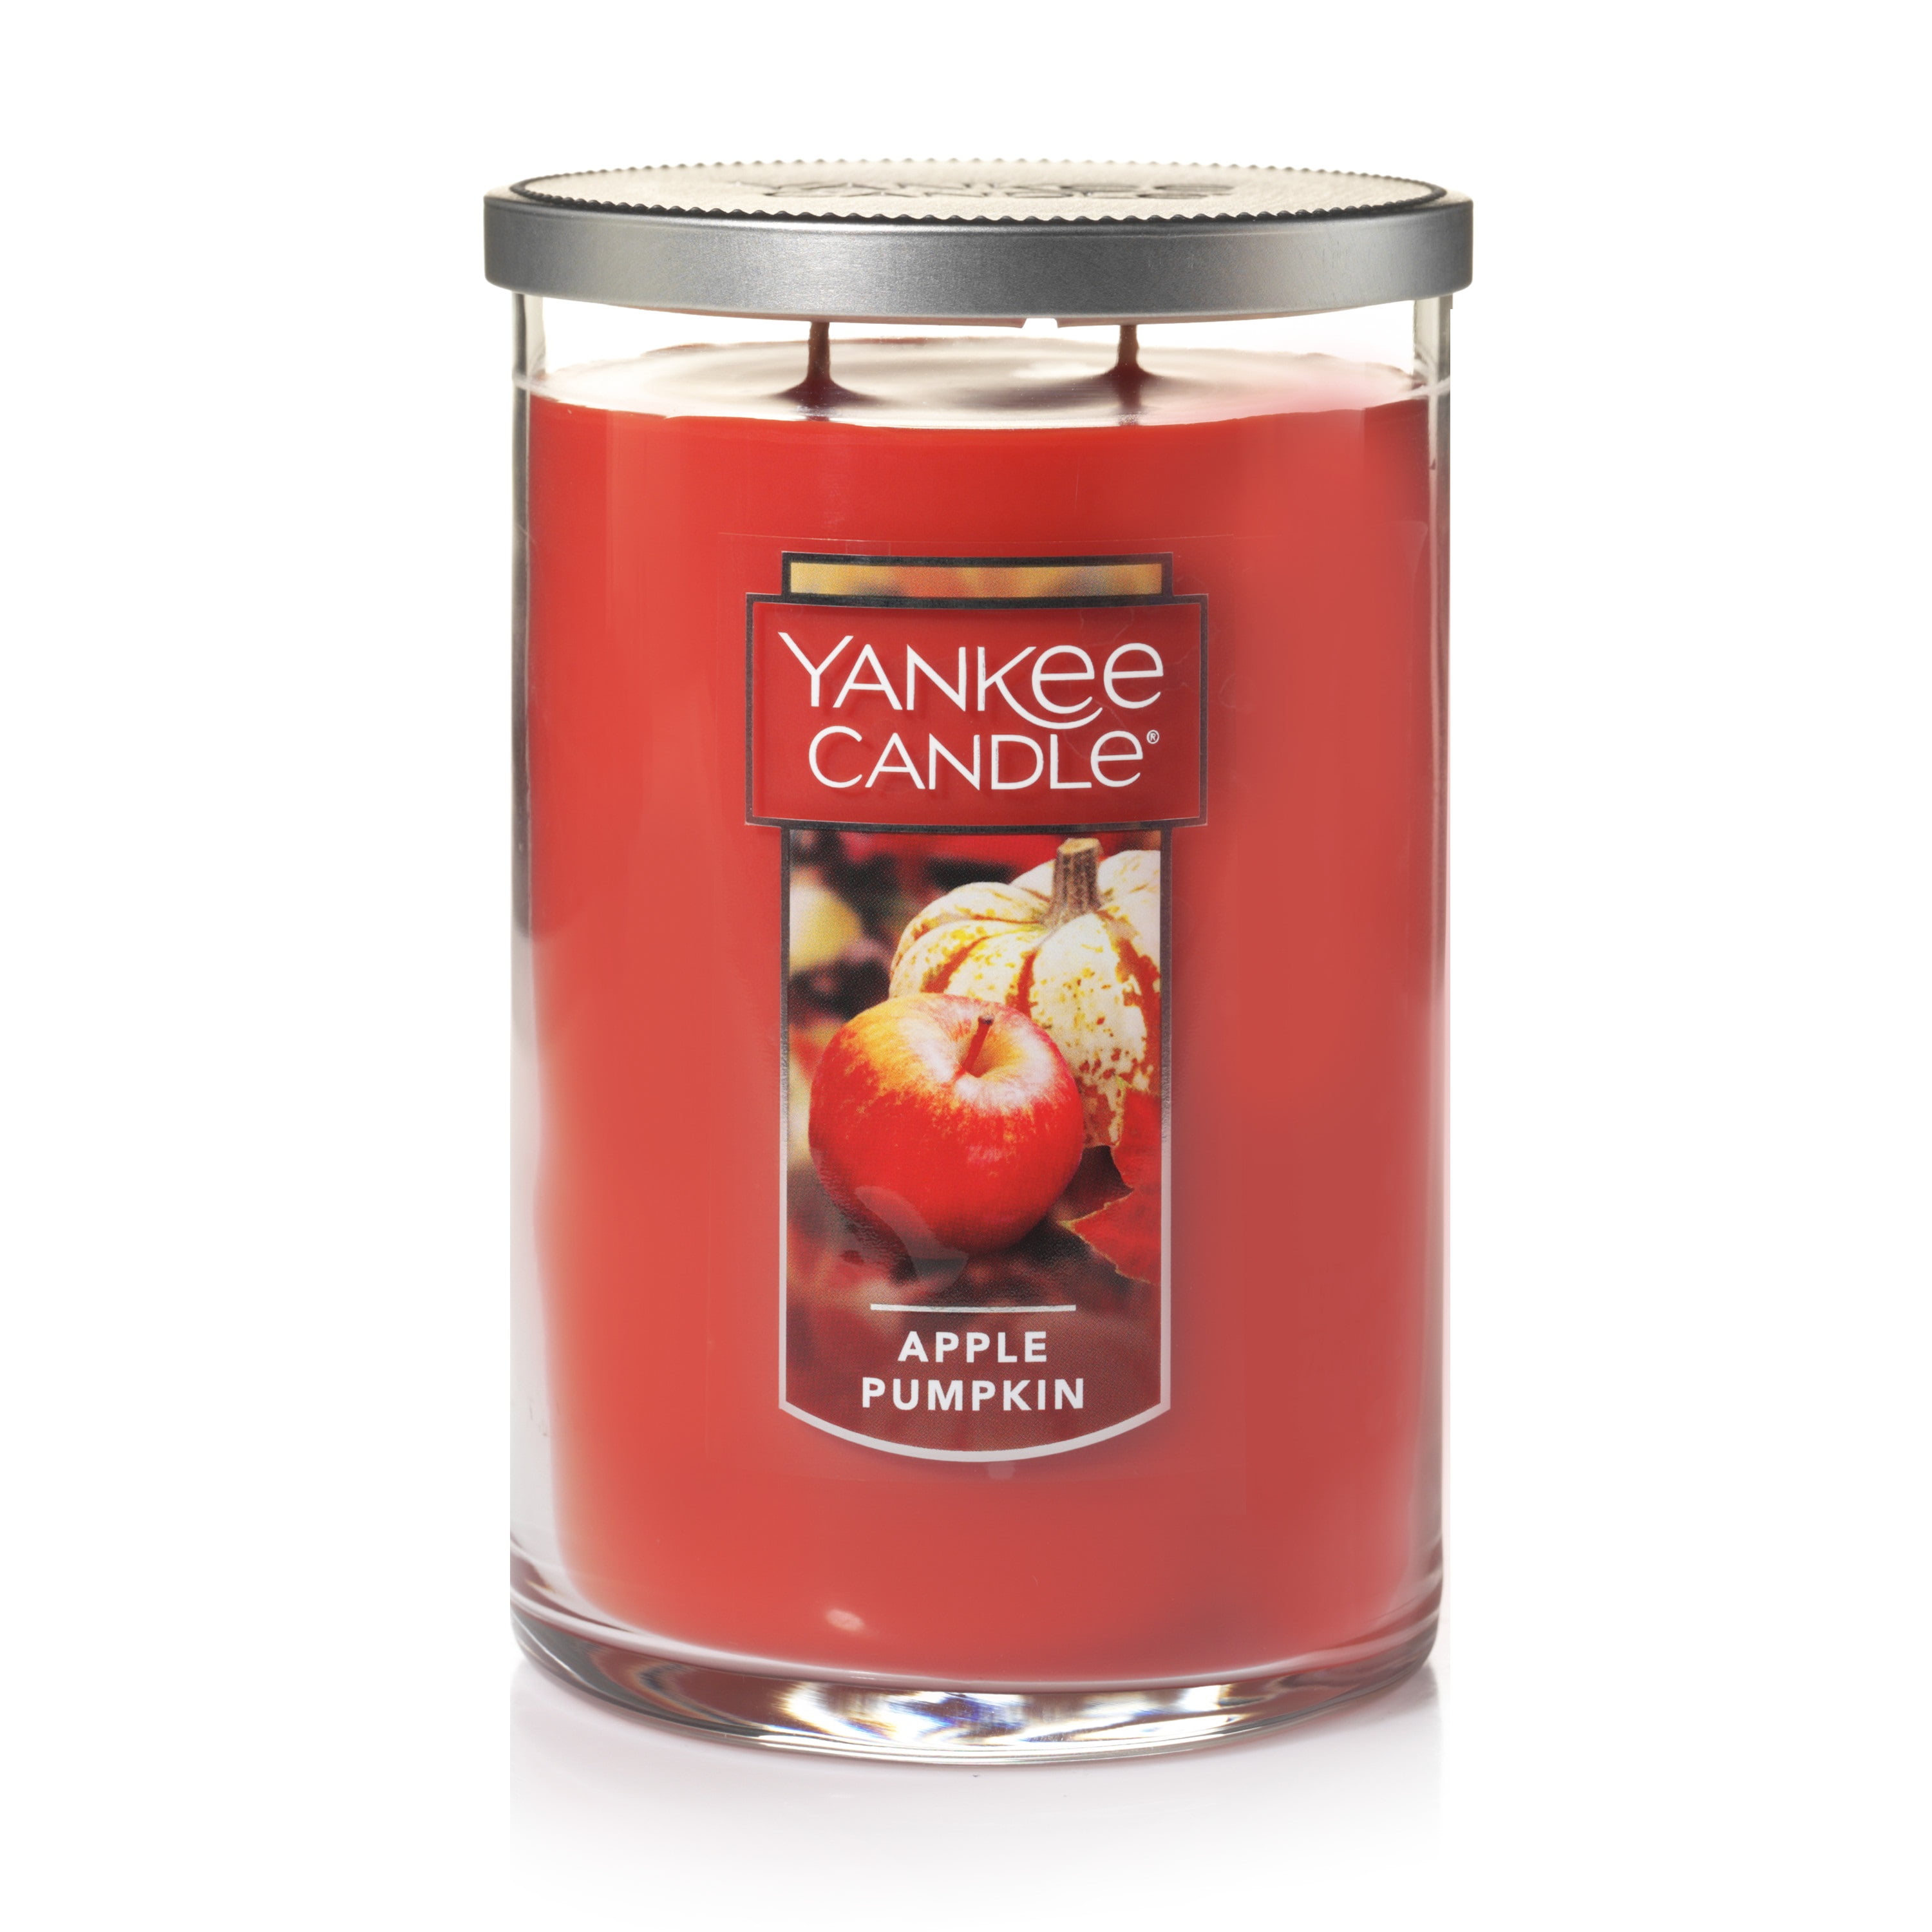 Yankee Candle Apple Pumpkin - Large 2-Wick Tumbler Candle